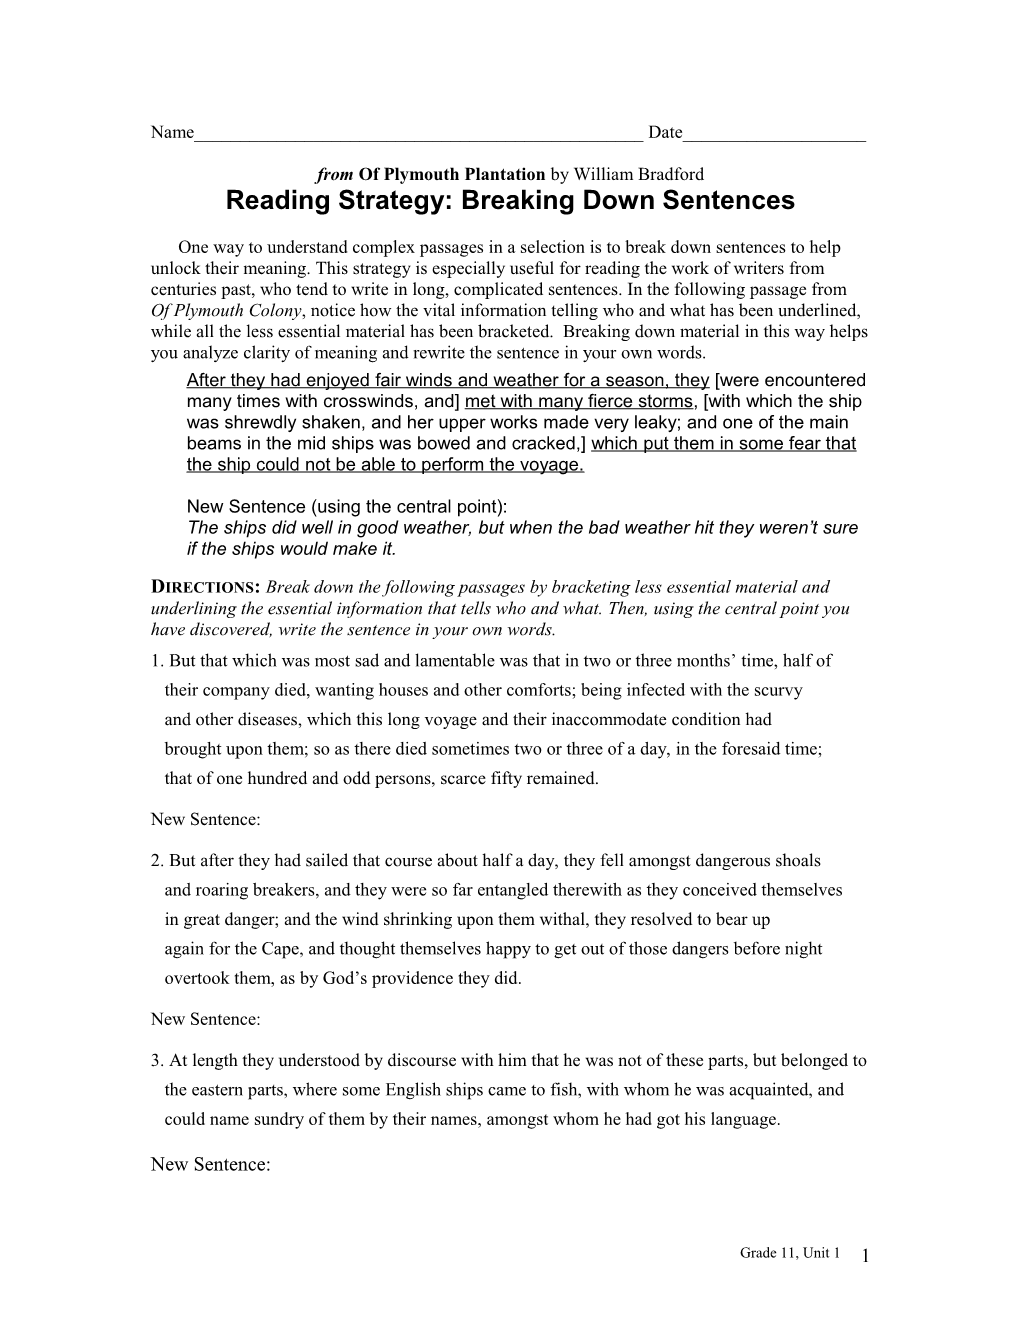 Reading Strategy: Breaking Down Sentences